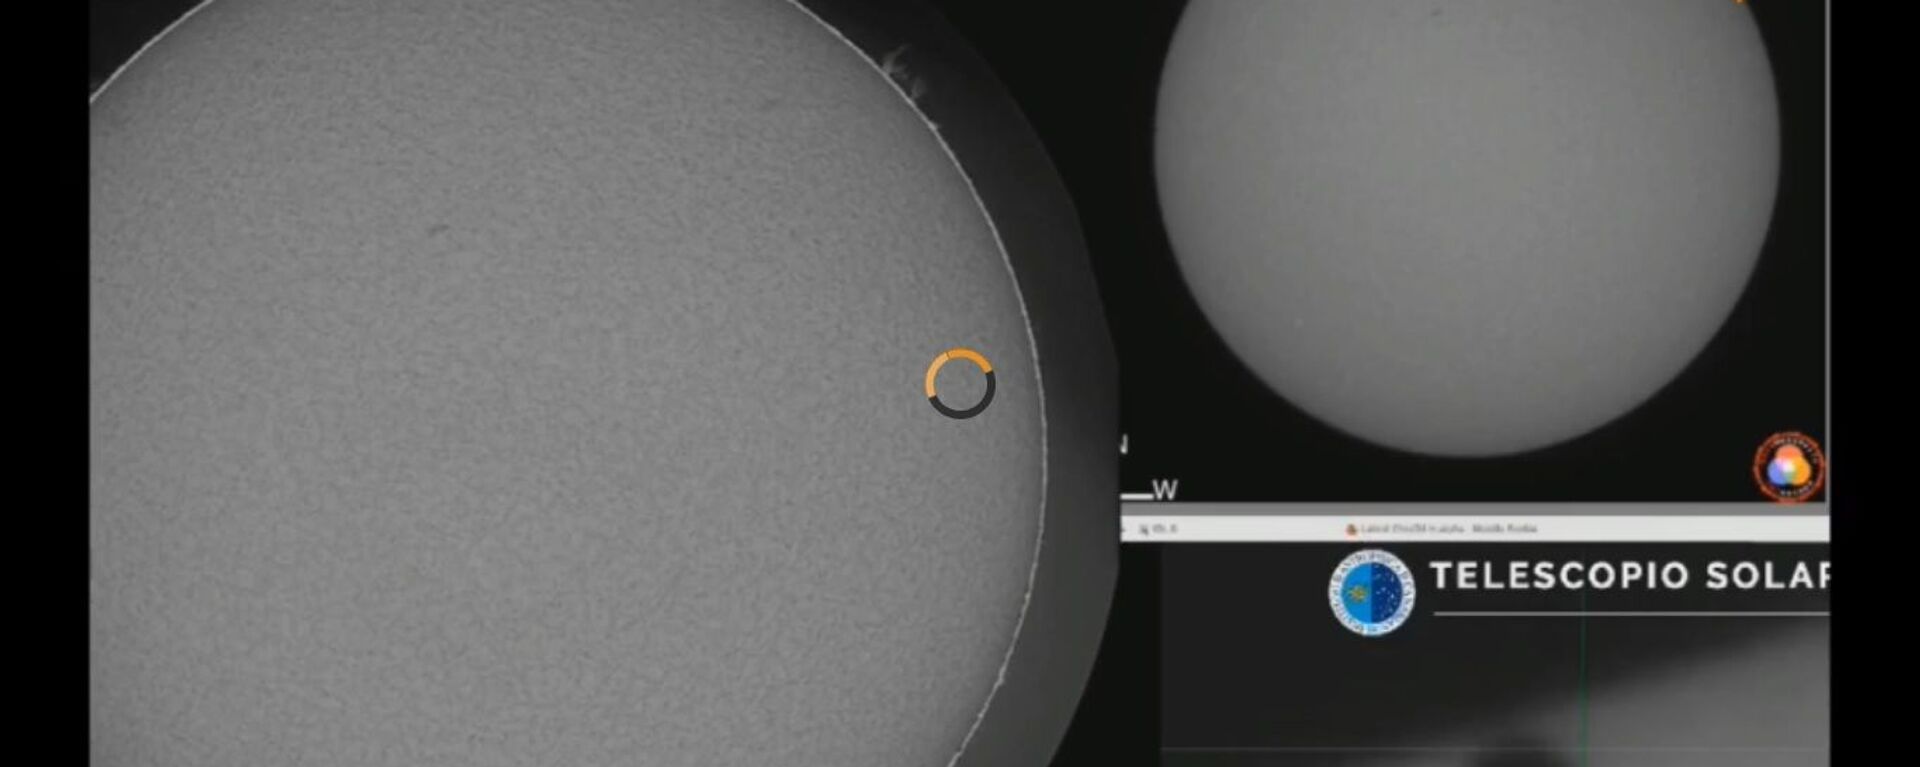 Меркурий совершает редкий транзит через Солнце - видео - Sputnik Казахстан, 1920, 11.11.2019